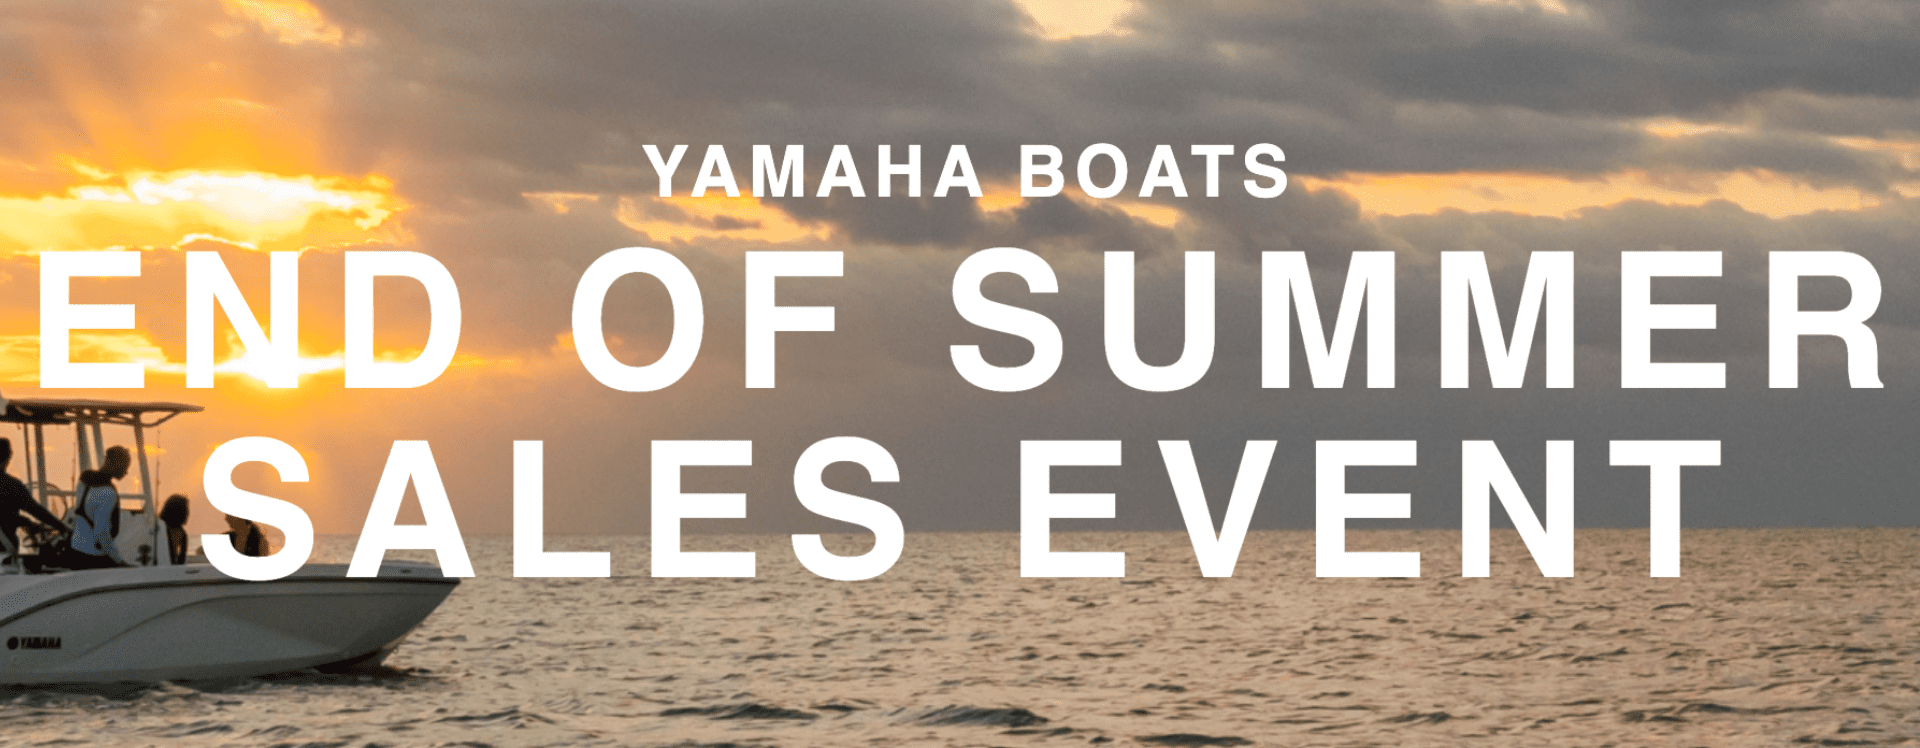 yamaha-boats-desktop